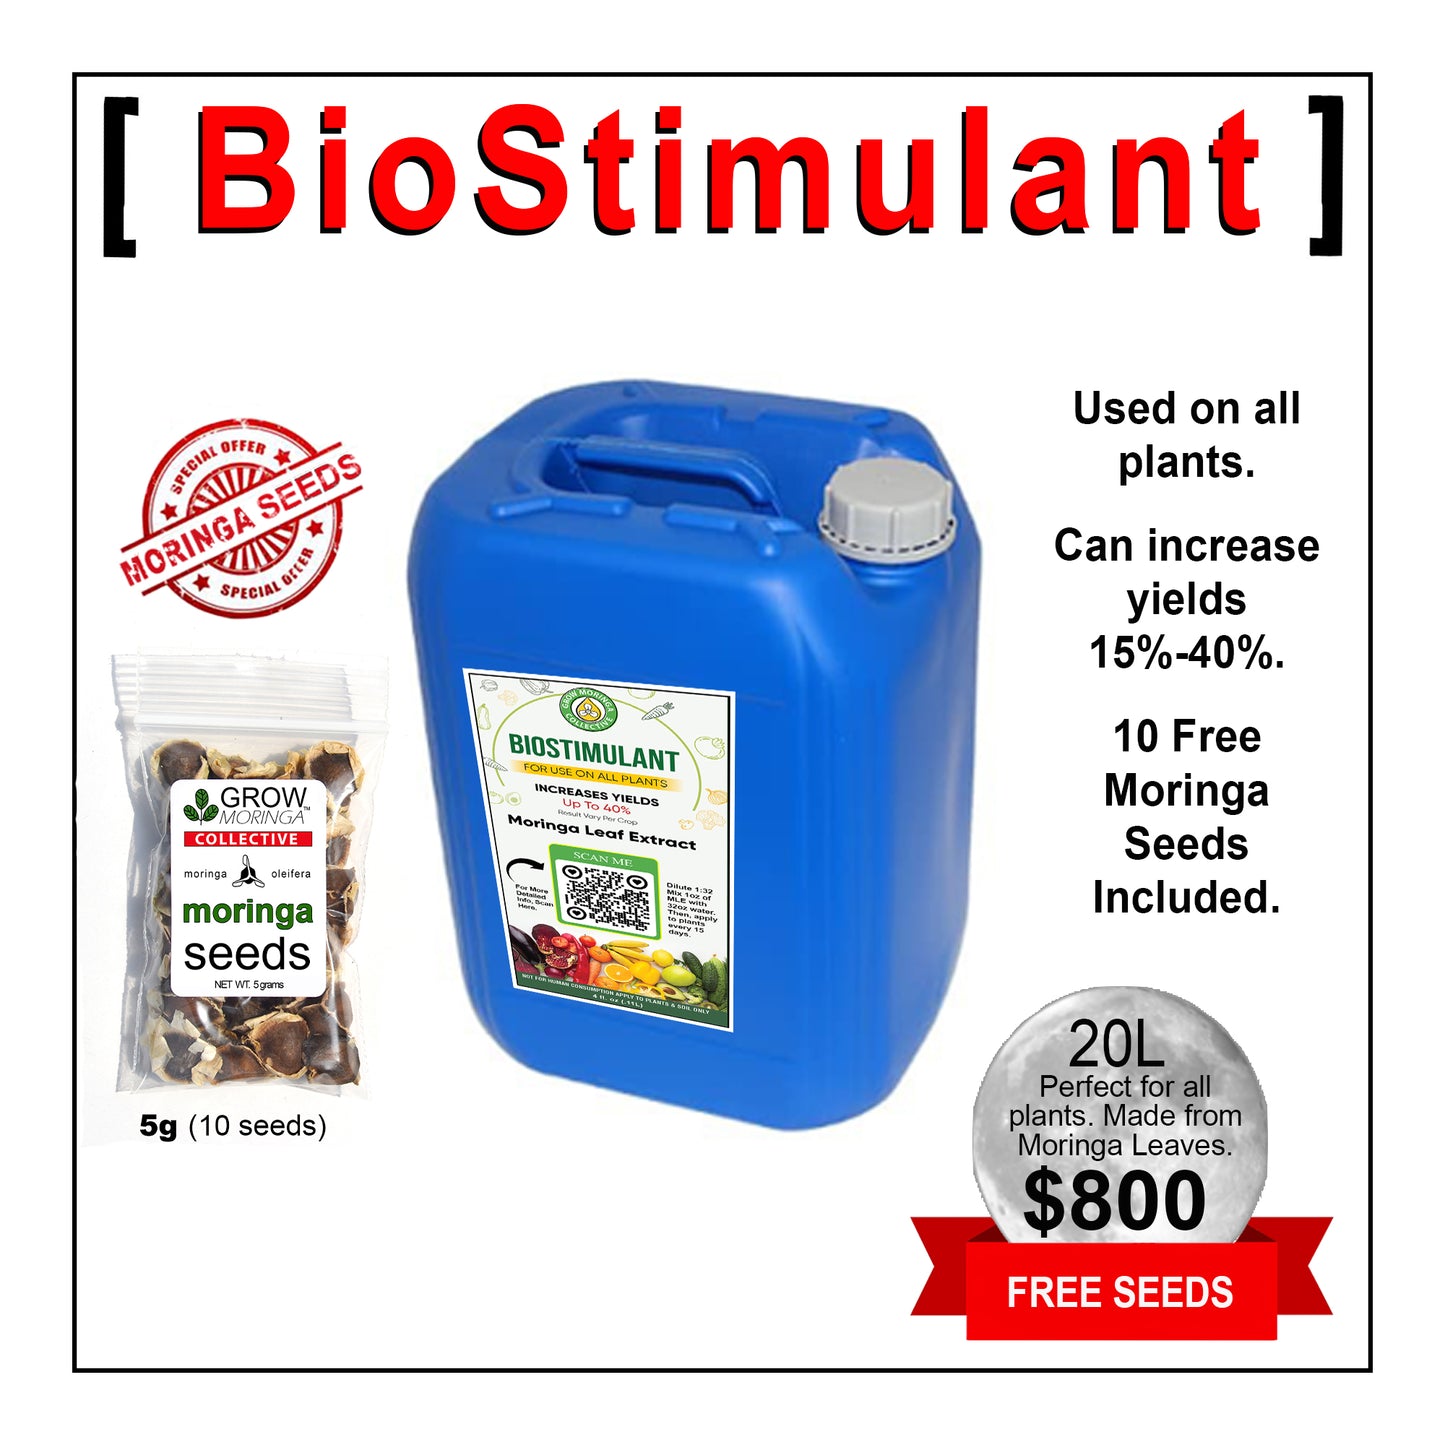 20L bottle of Biostimulant with 5g Bag of Moringa Seeds